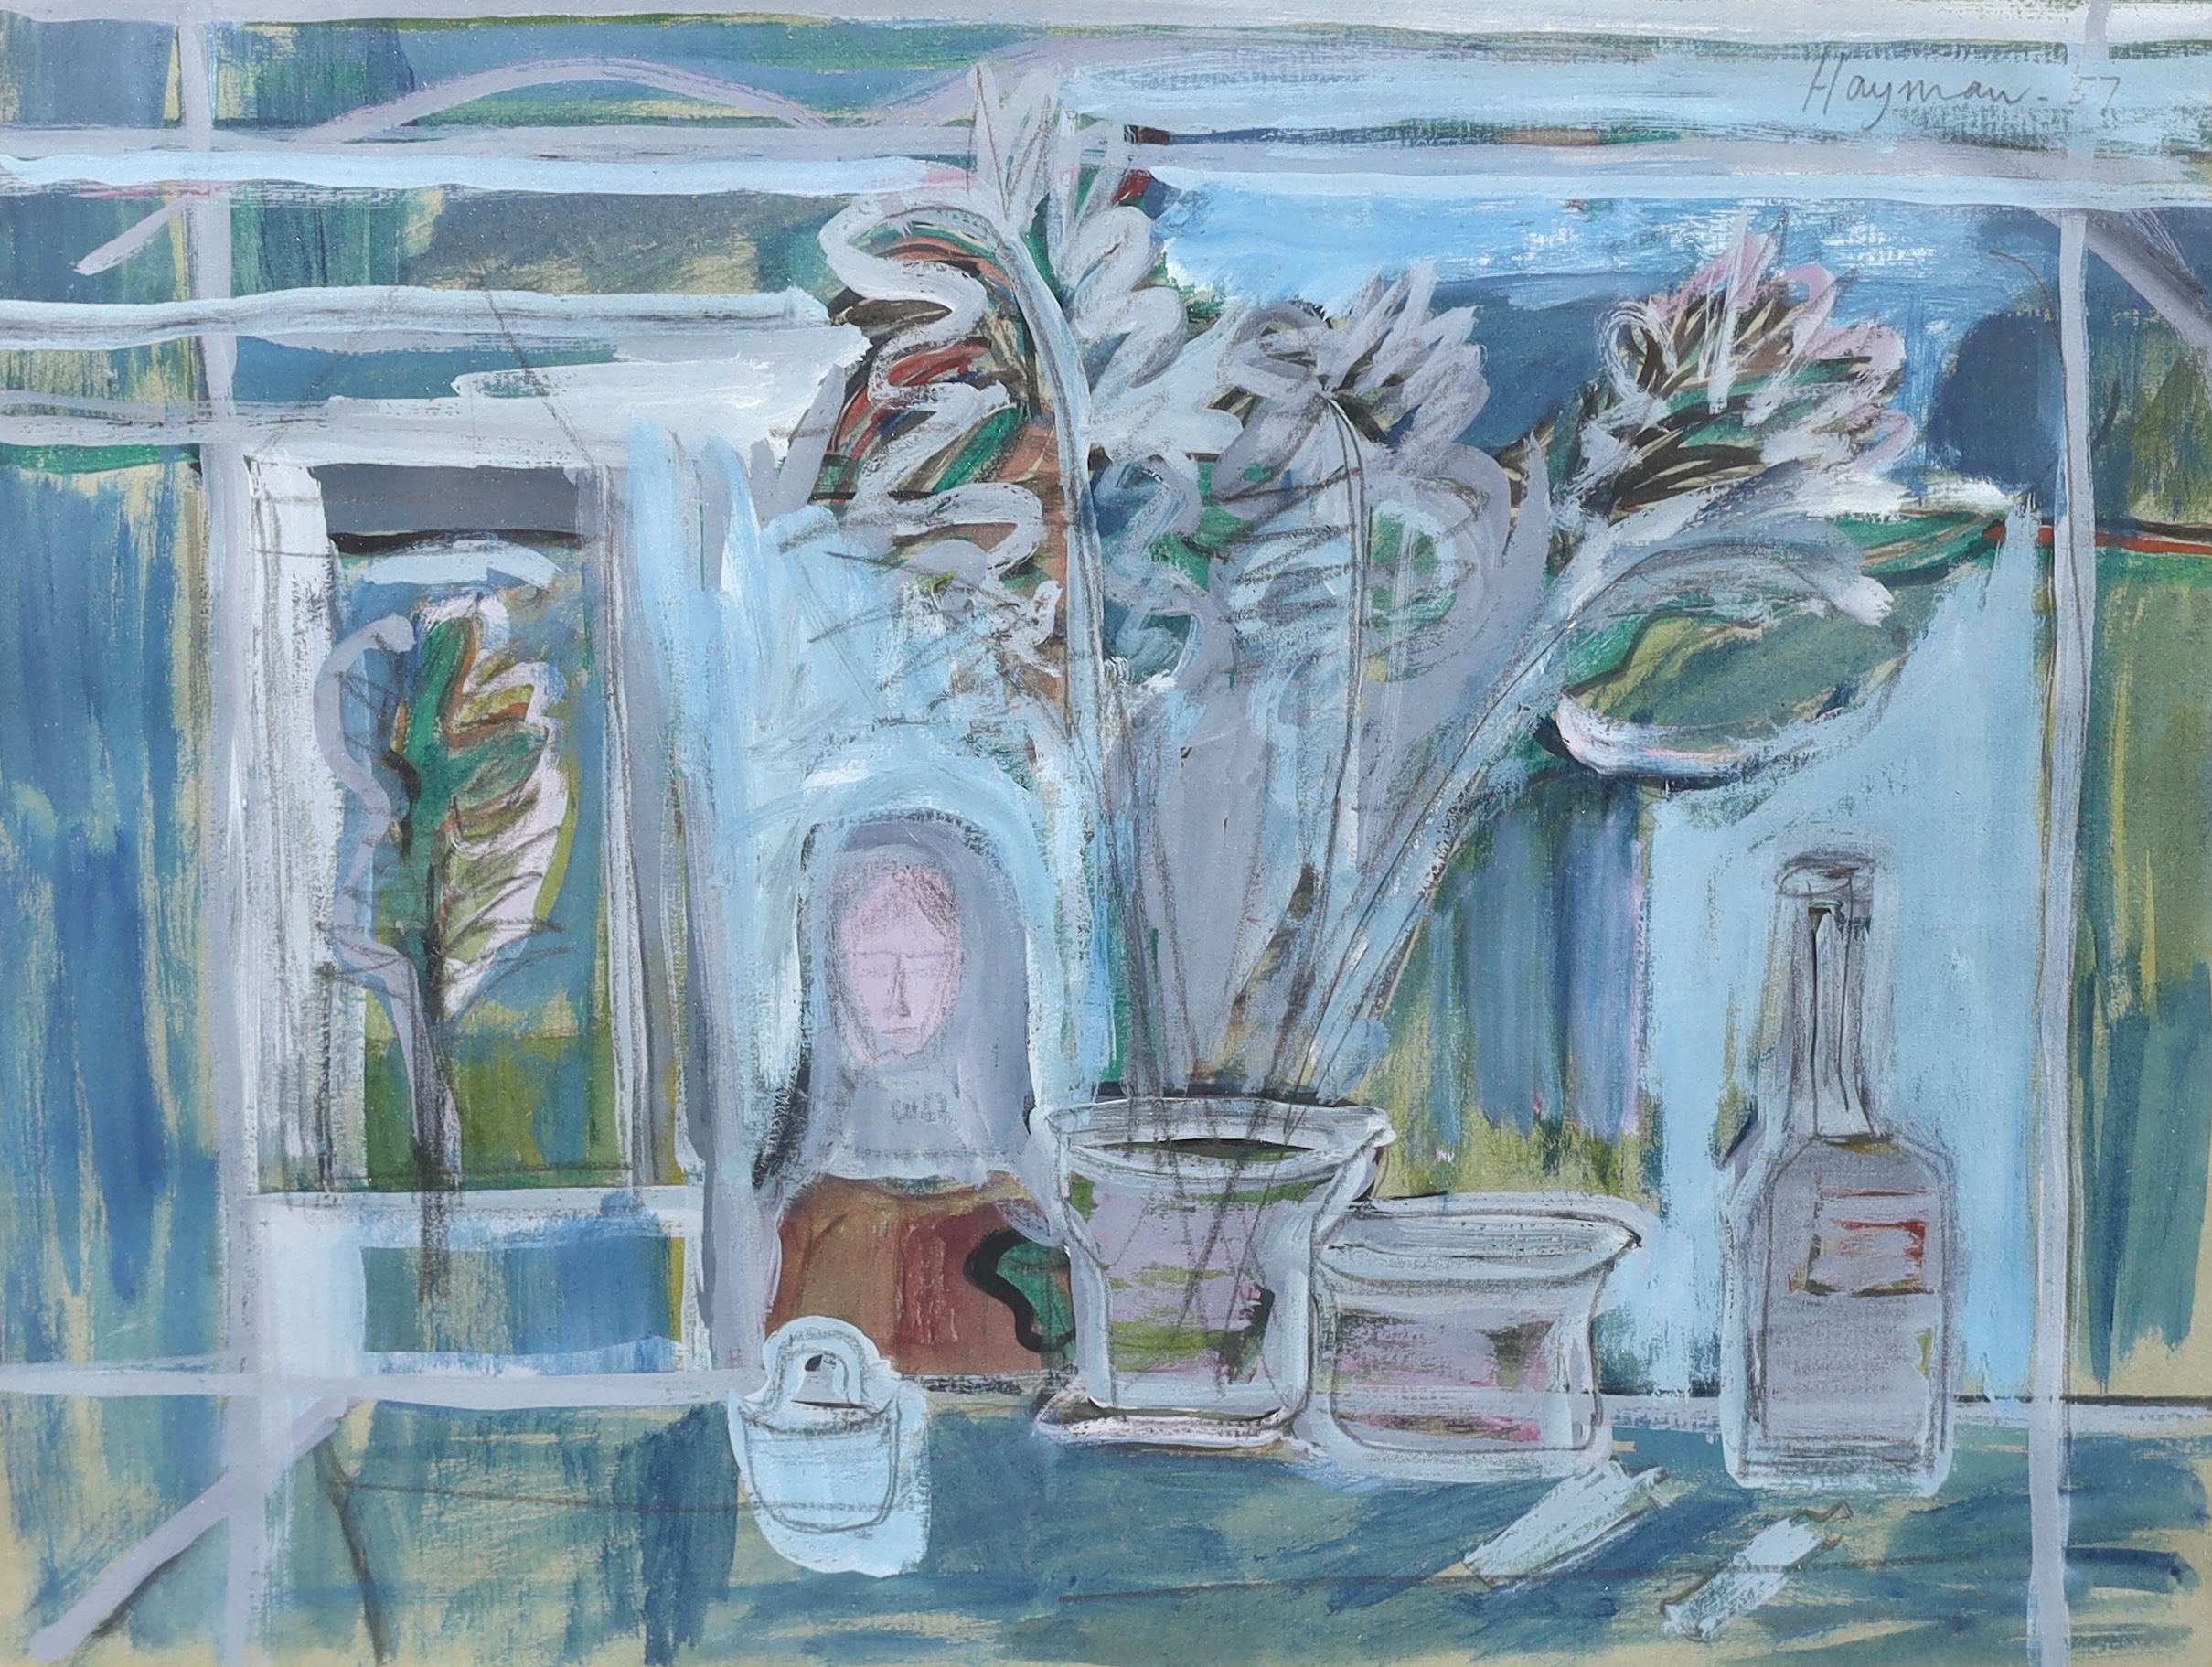 Patrick Hayman (English, 1915-1988), 'Through the window', gouache, 22.5 x 29.5cm